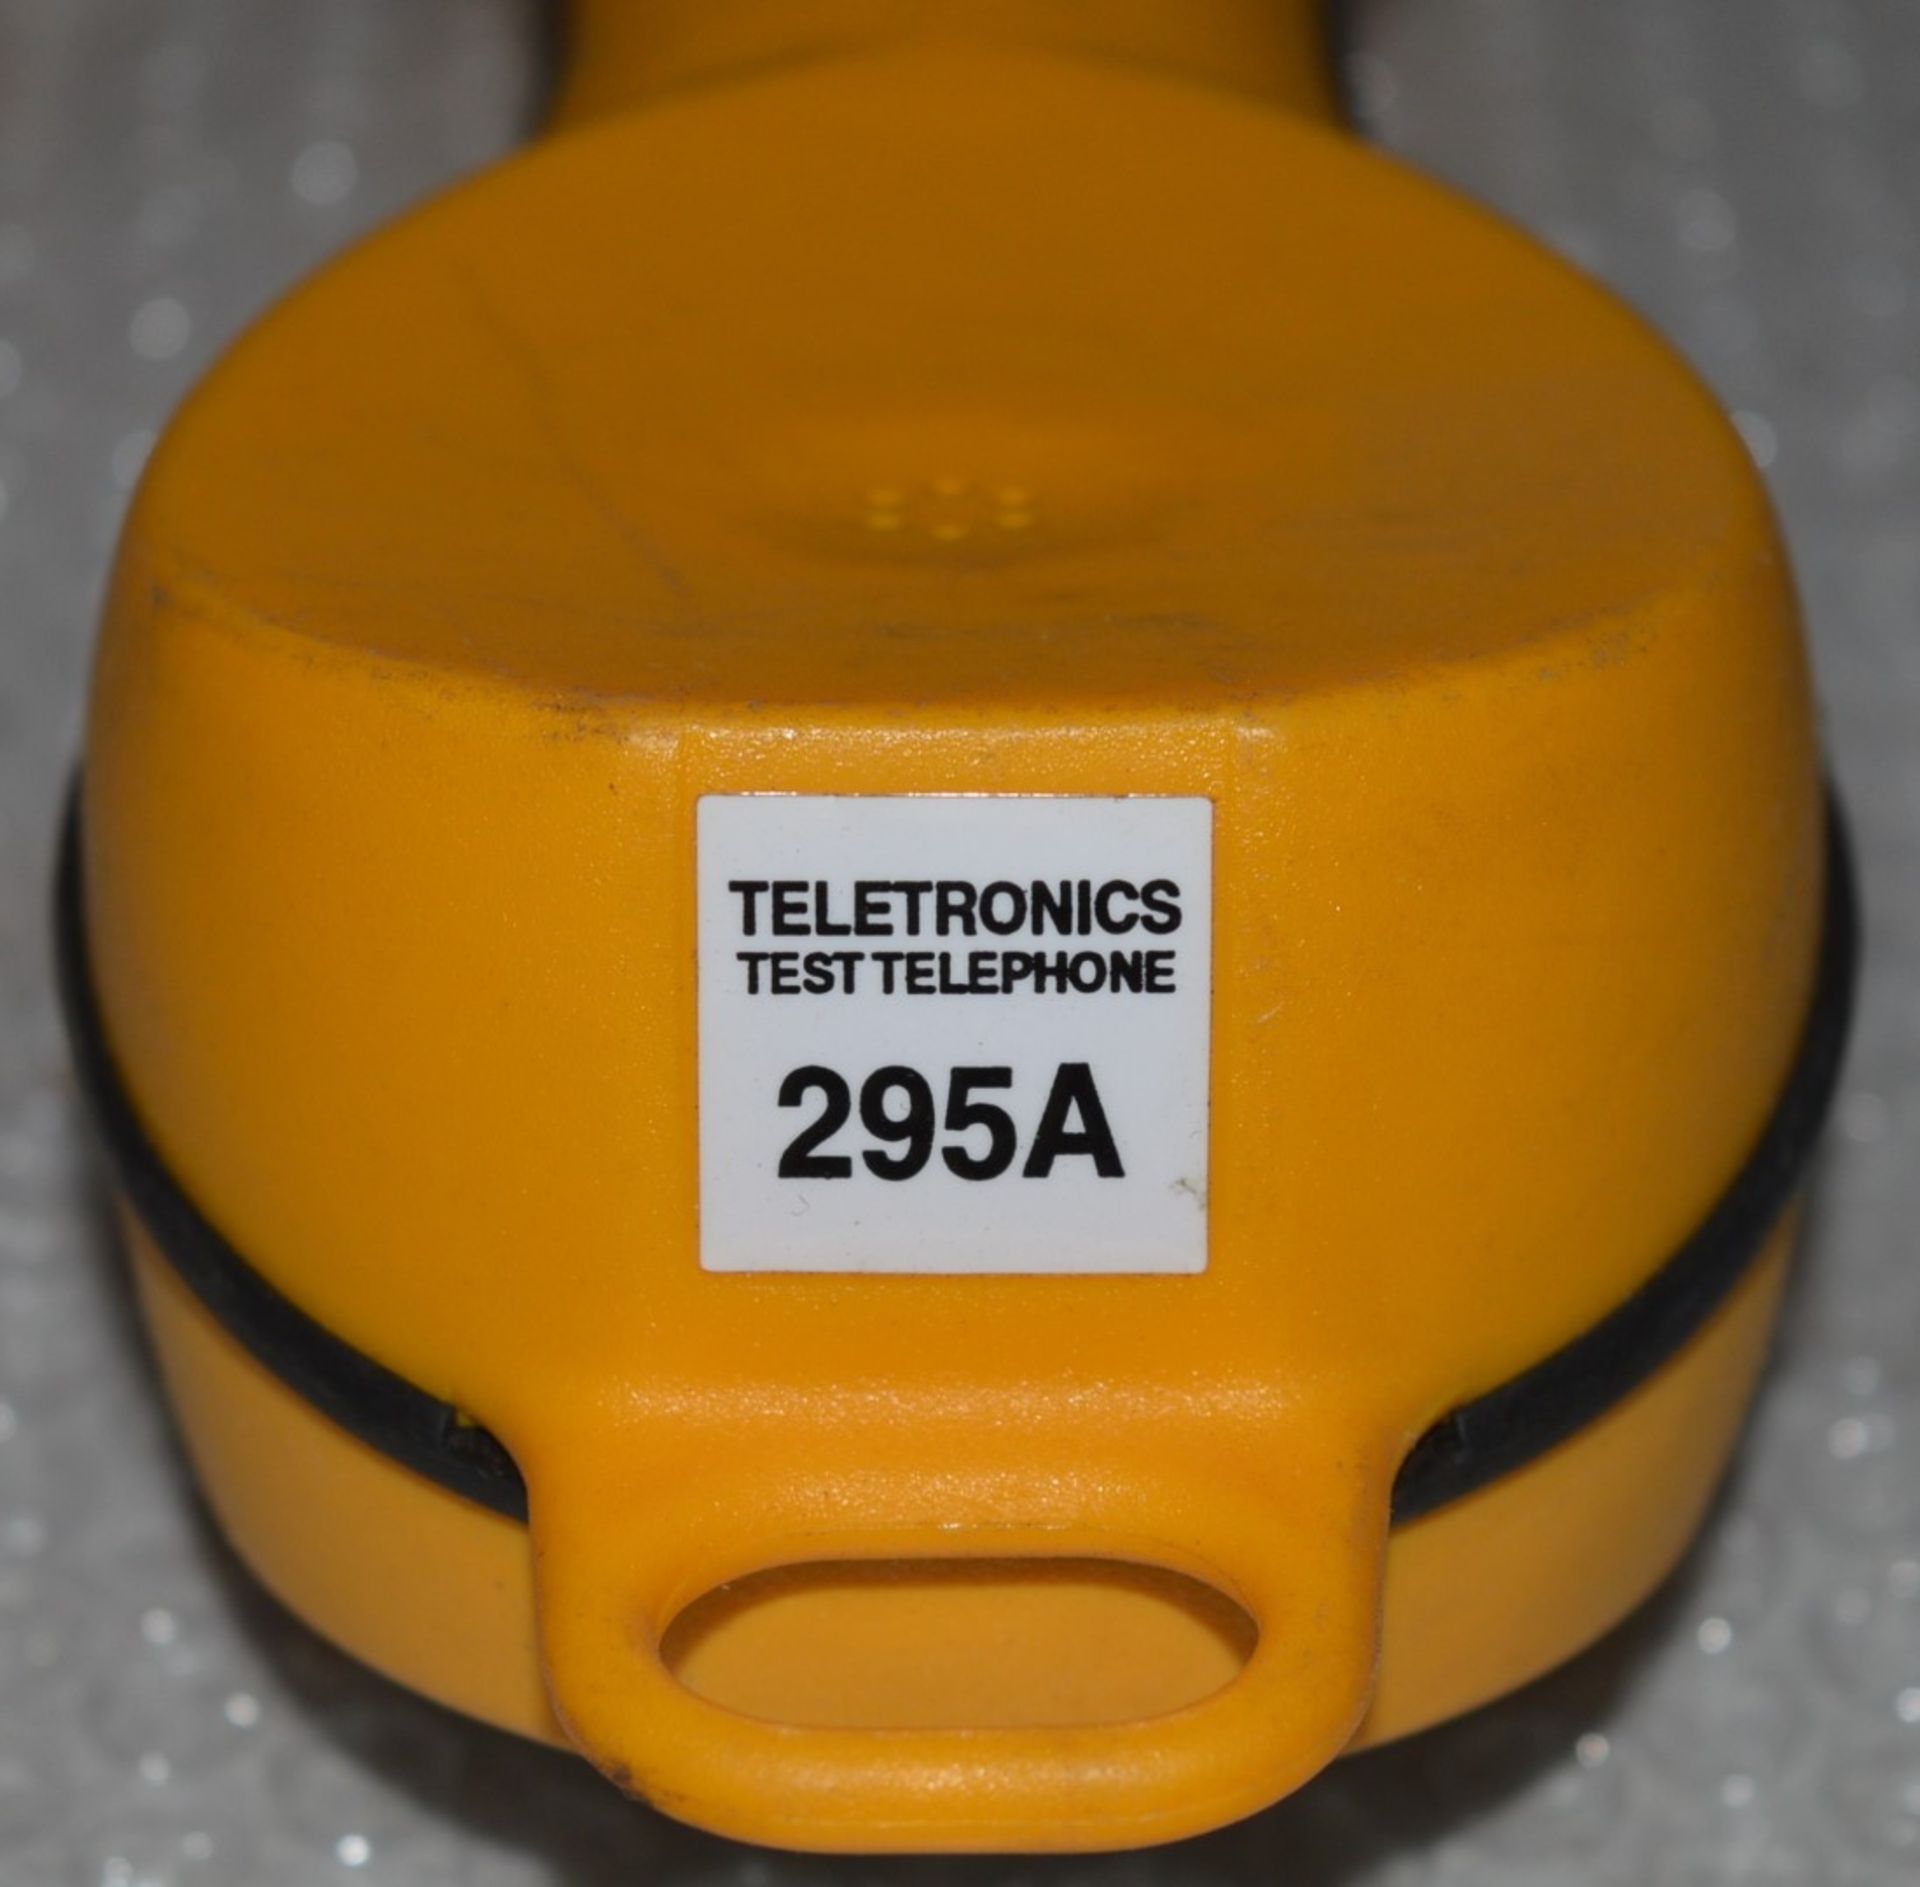 5 x Teletronics 295A Test Telephones - CL300 - Ref PC319 - Location: Altrincham WA14 - Image 4 of 5